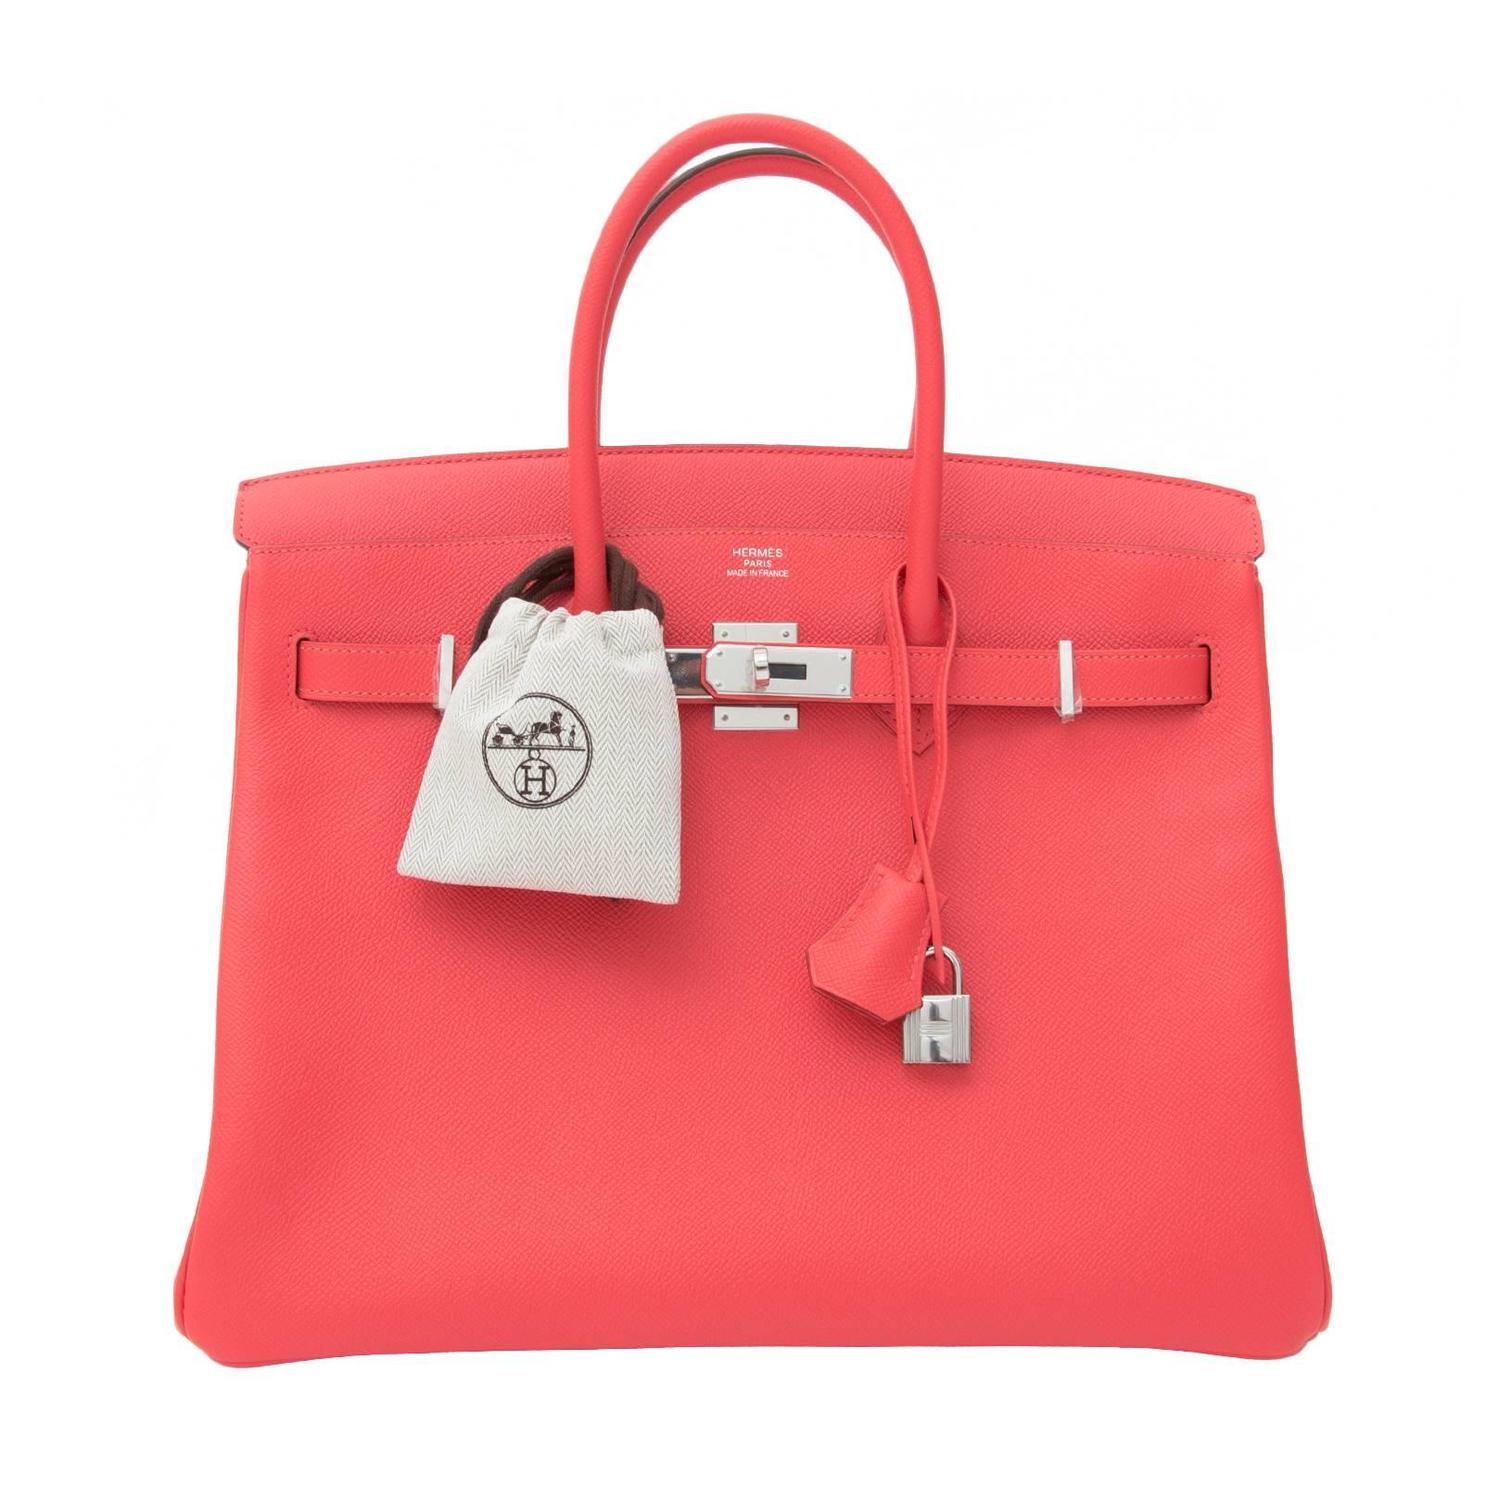 BRAND NEW Hermès Birkin Bag 35 Epsom Rose Jaipur PHW For Sale at 1stdibs